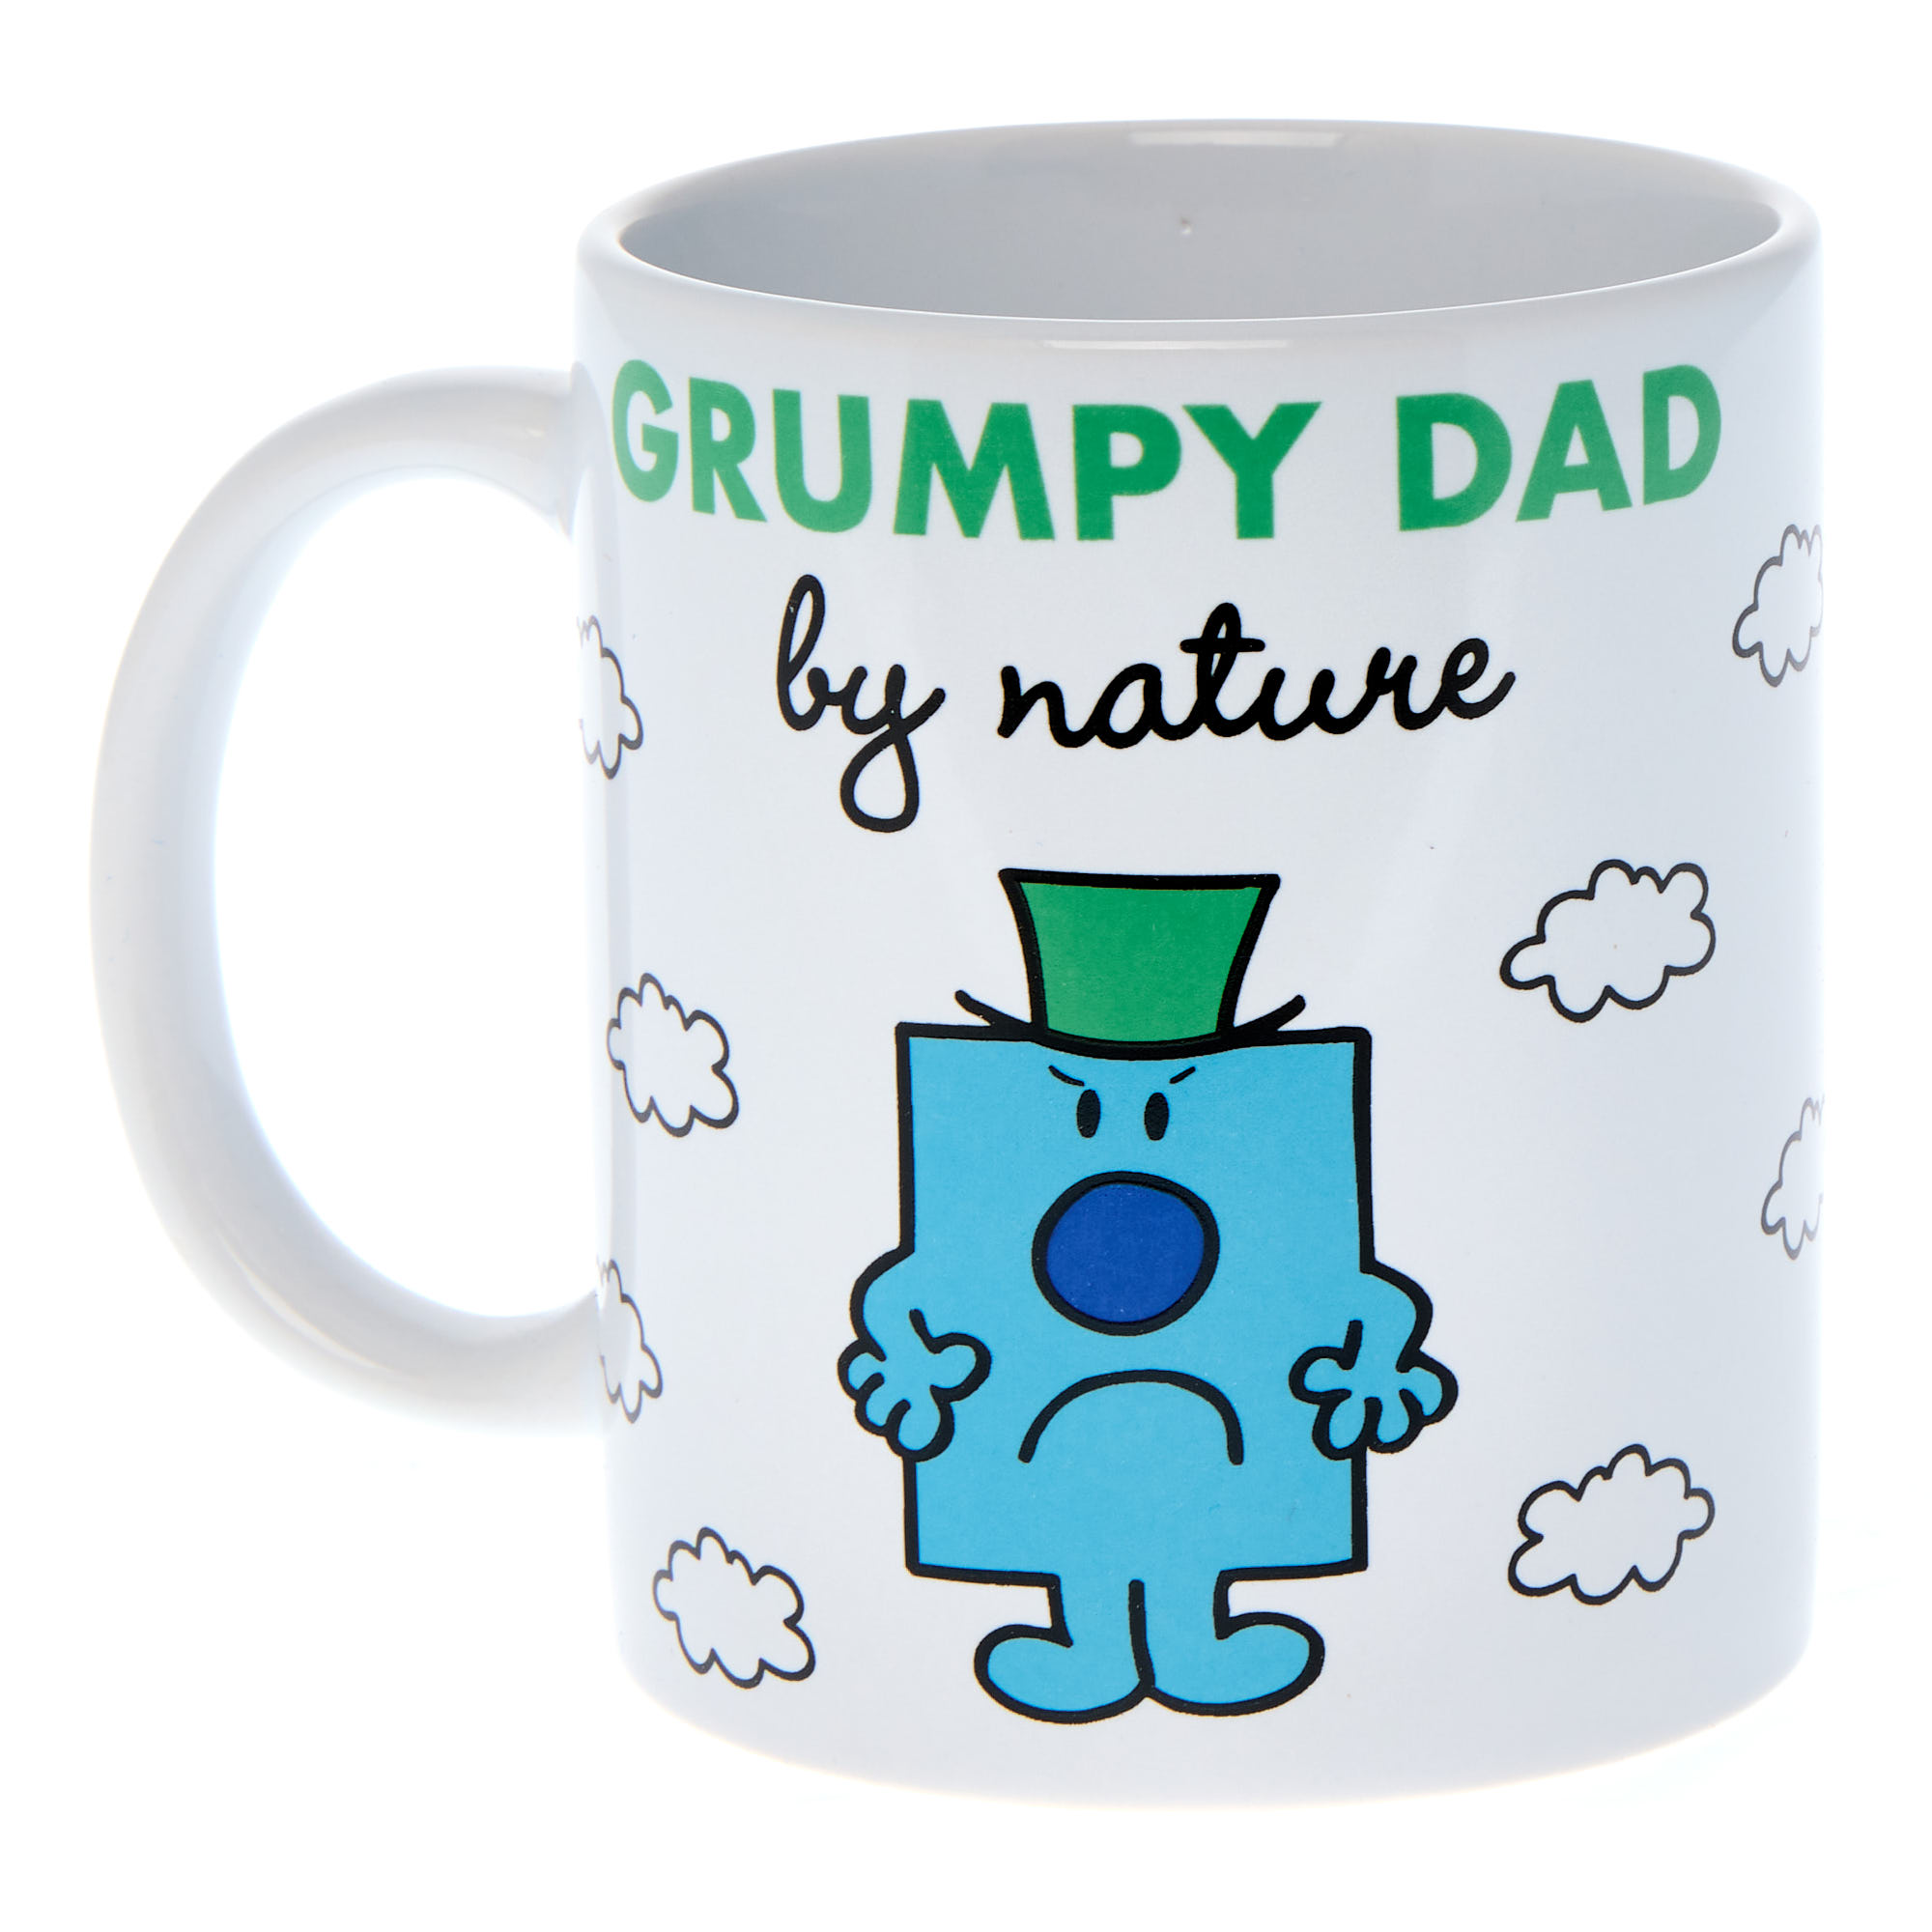 Mr Grumpy Dad Mug & Socks